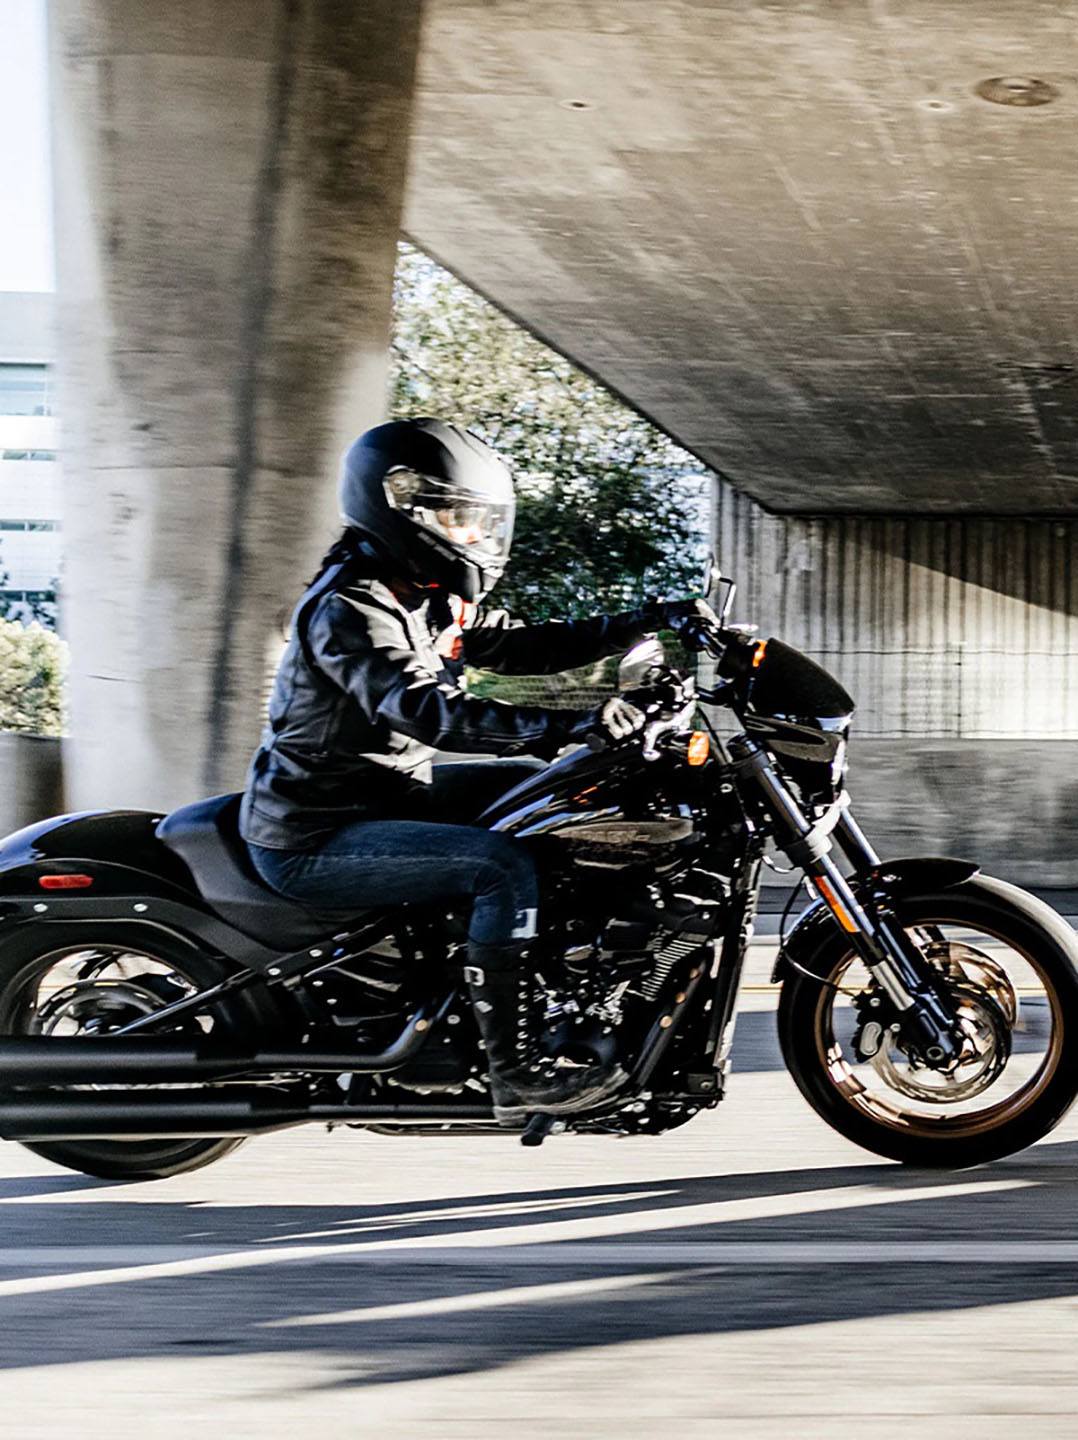 2022 Harley-Davidson Low Rider® S in Muncie, Indiana - Photo 3